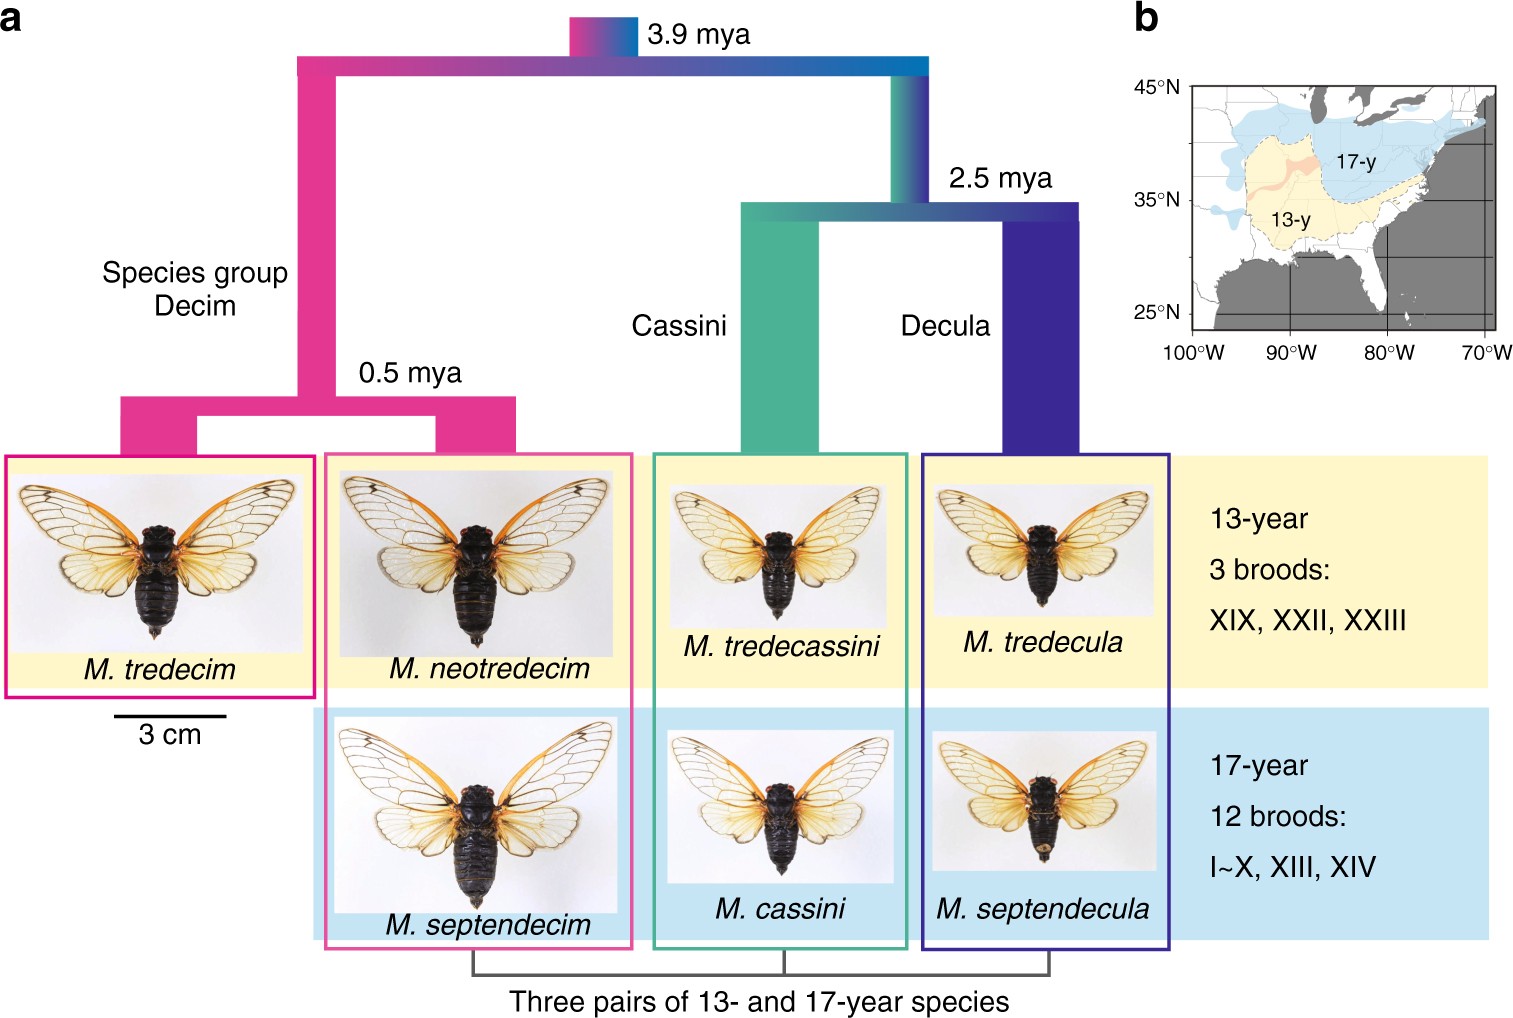 Specific group. Цикл жизни цикады. Cicada Lifecycle. Цикада биологический цикл. Cicada перевод.